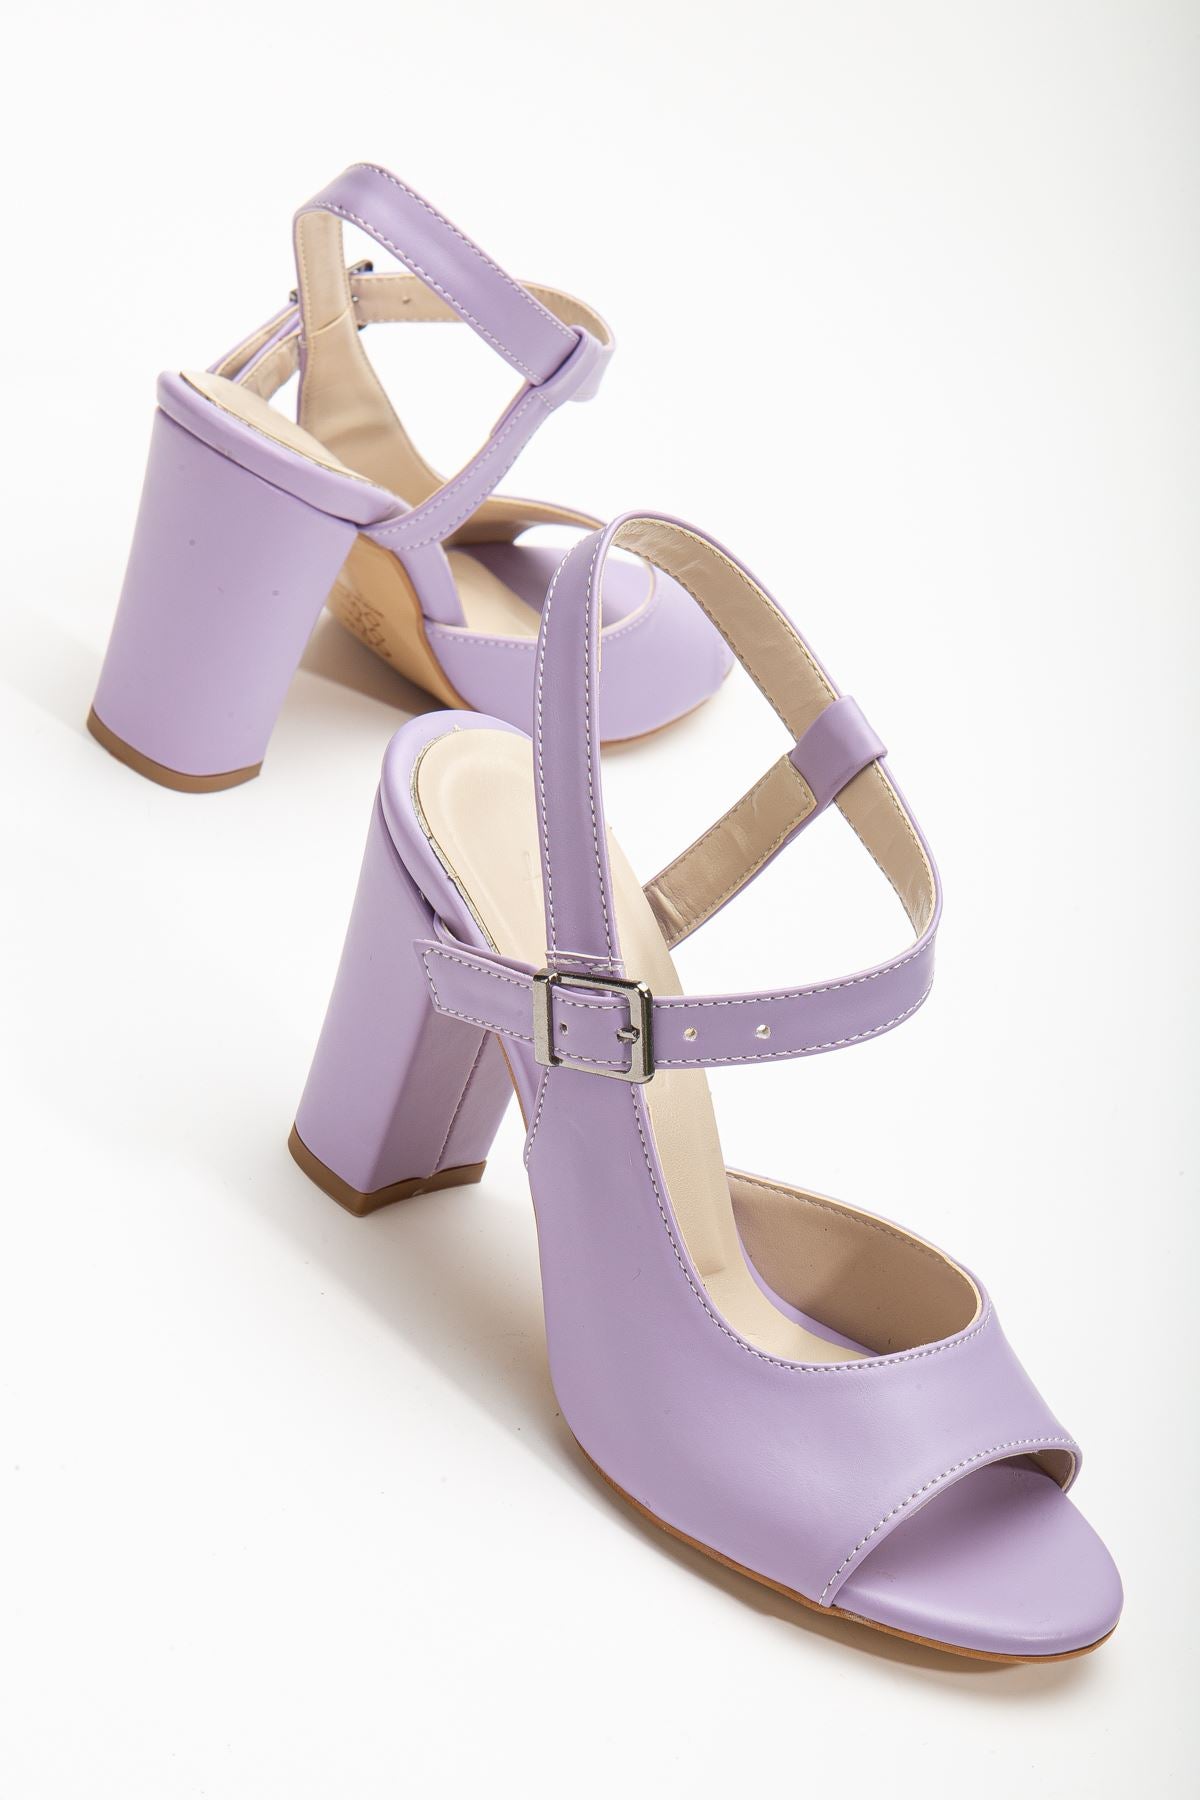 Lovisa Heeled Lilac Skin Women's Shoes - STREETMODE™